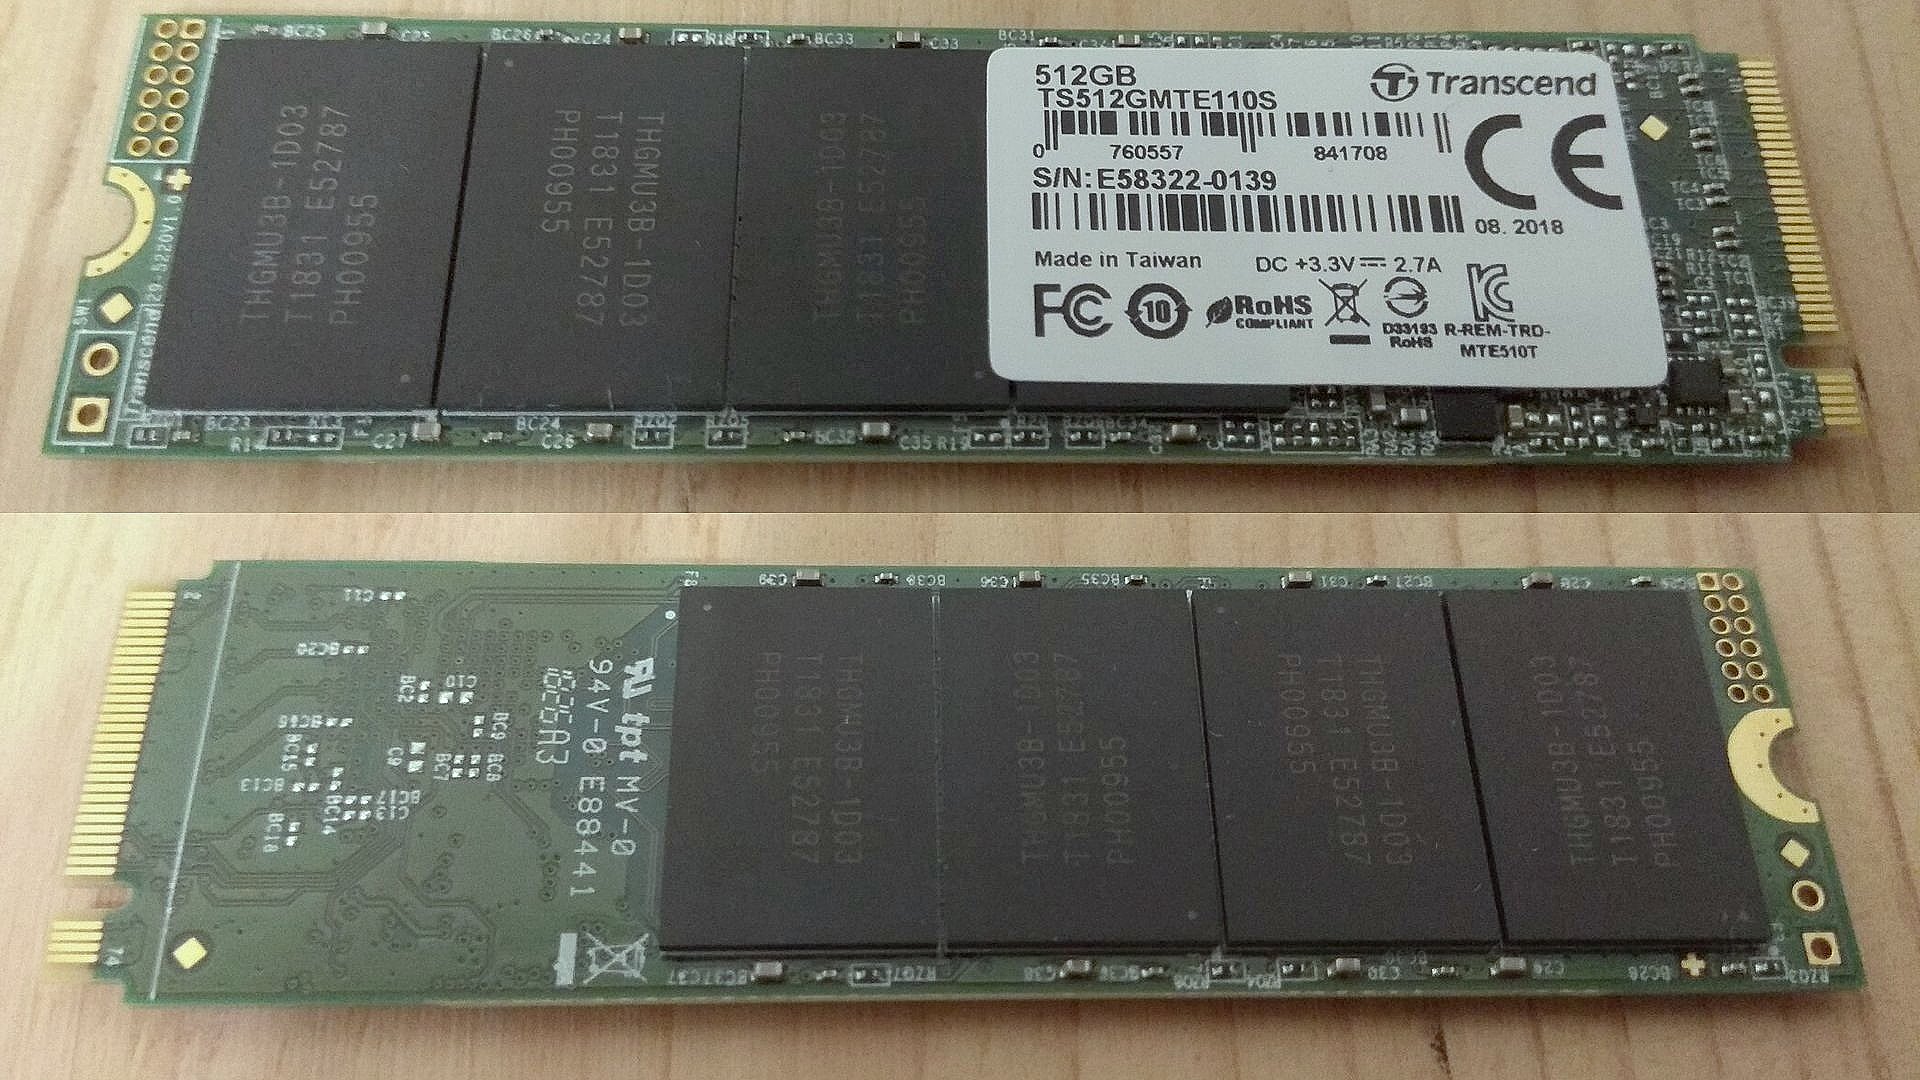 2.5 - SSD 240Go Integral V-series V2 - C42